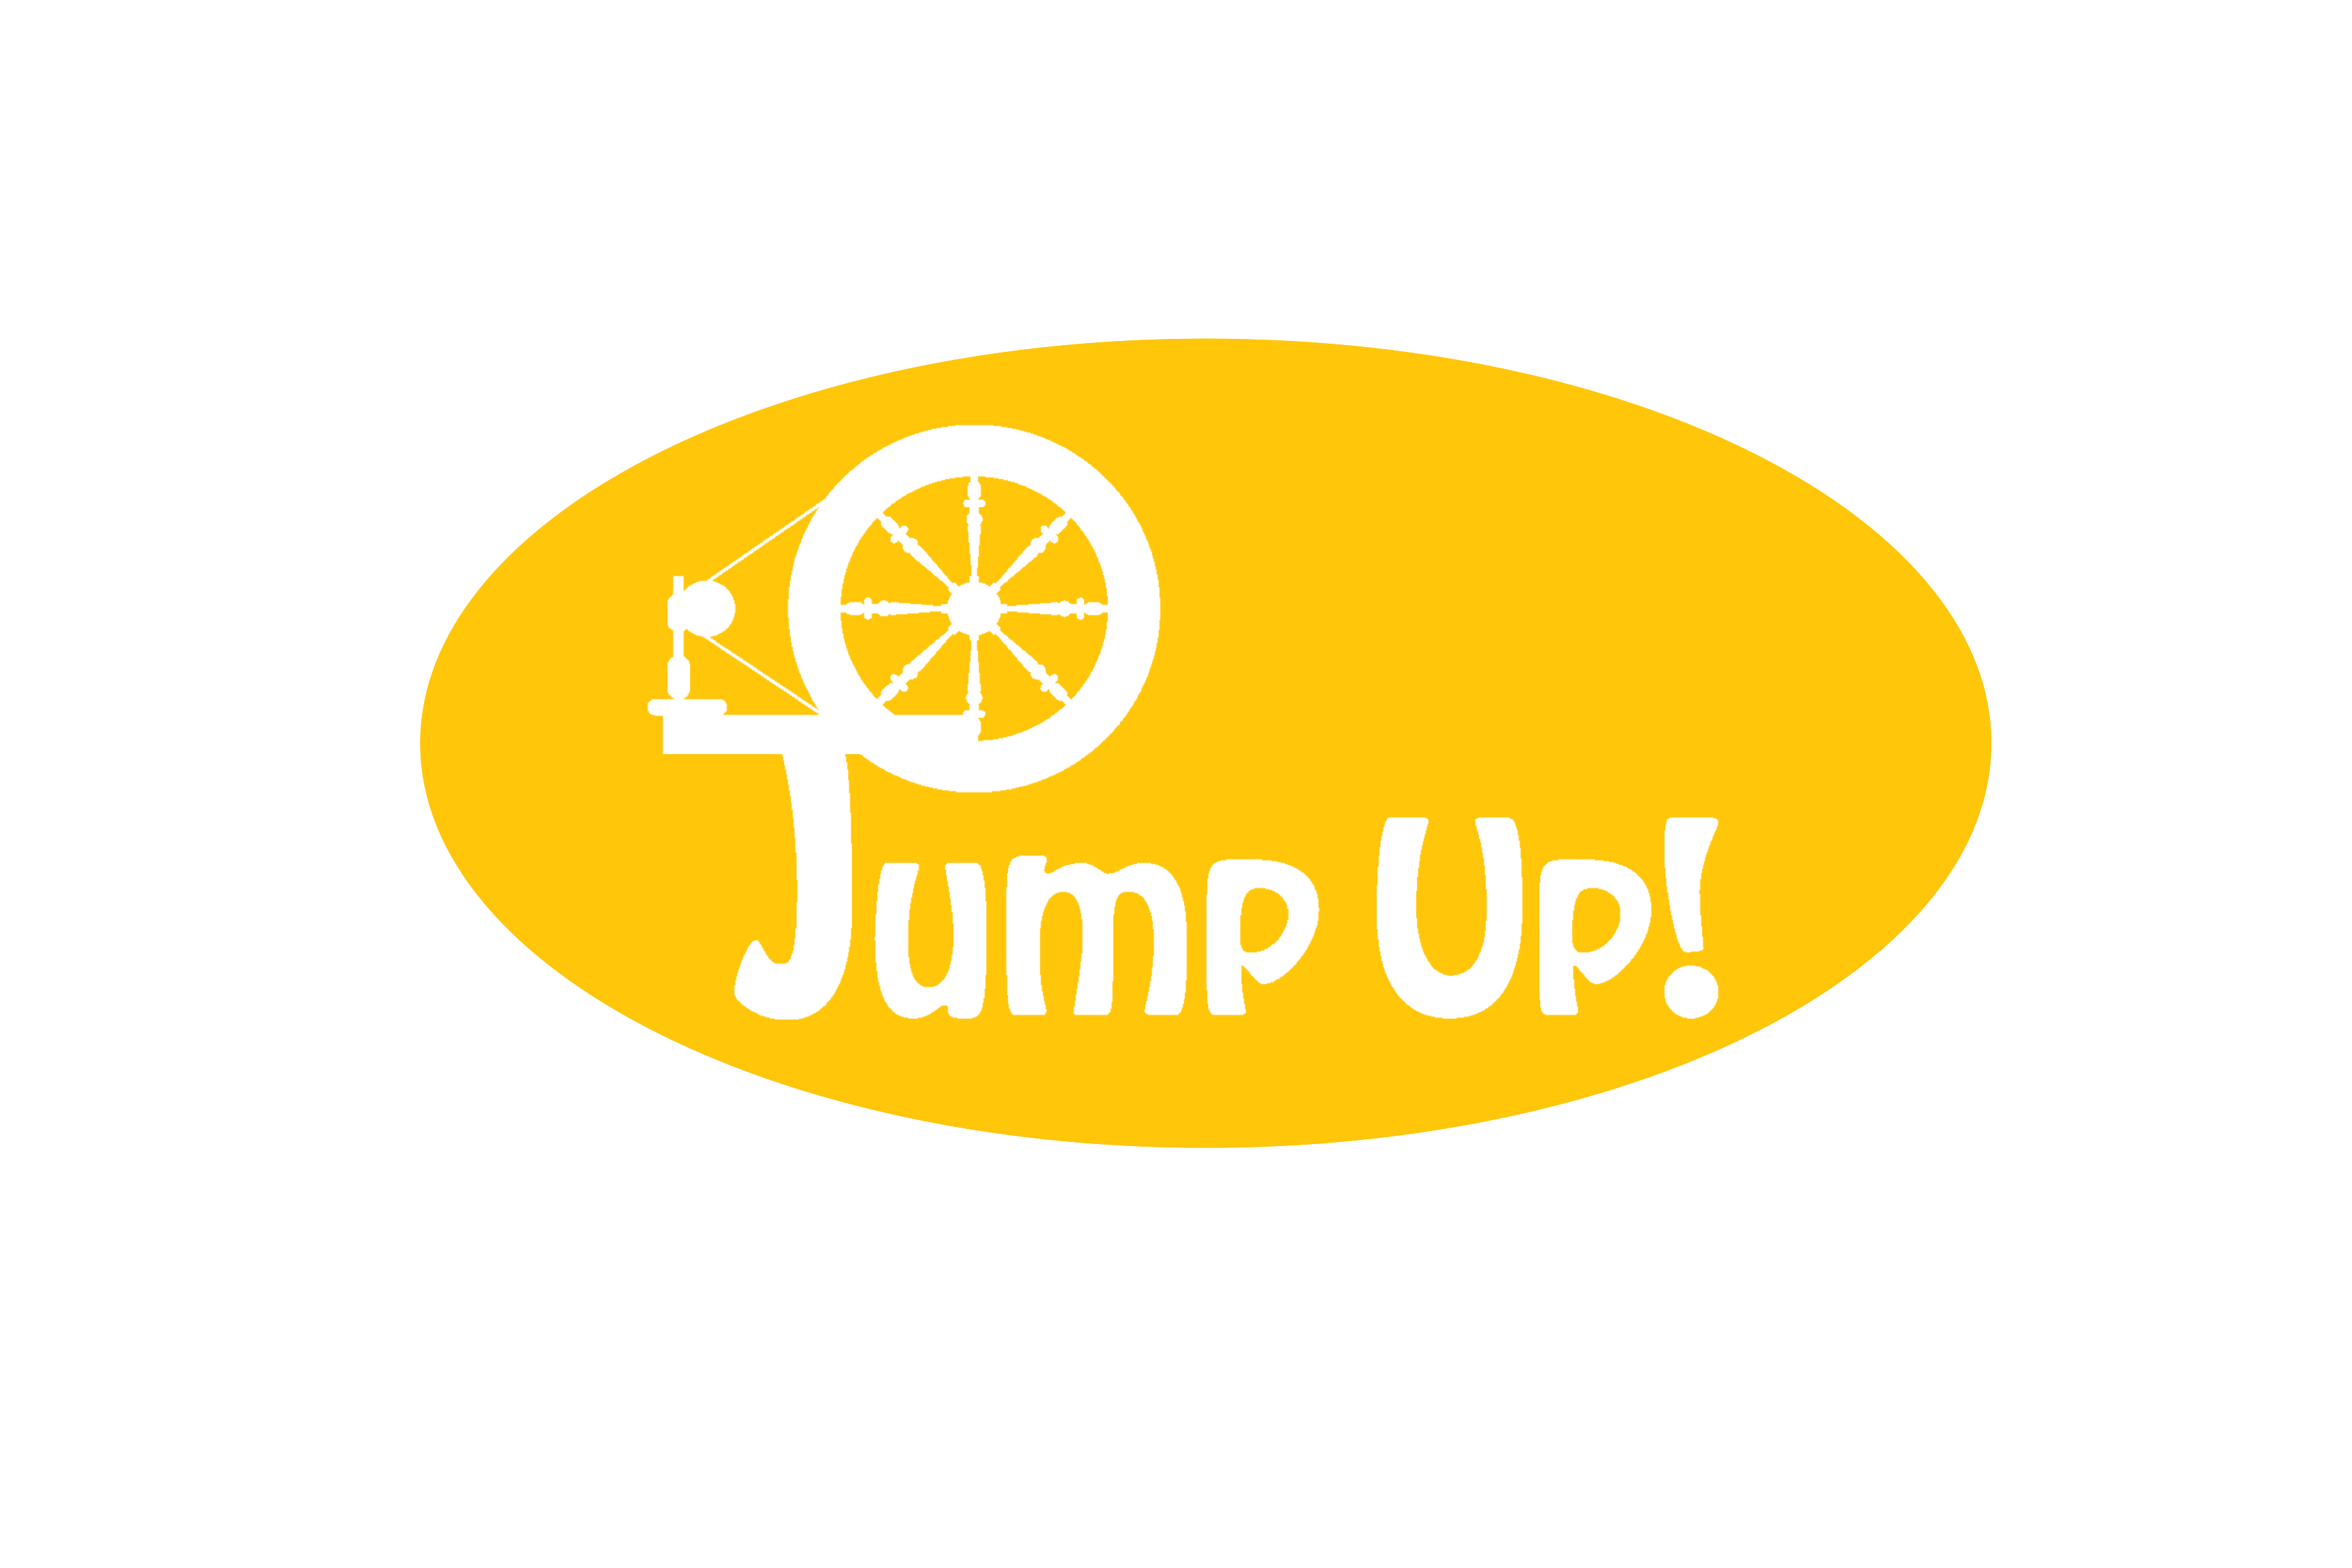 JUMP UP!